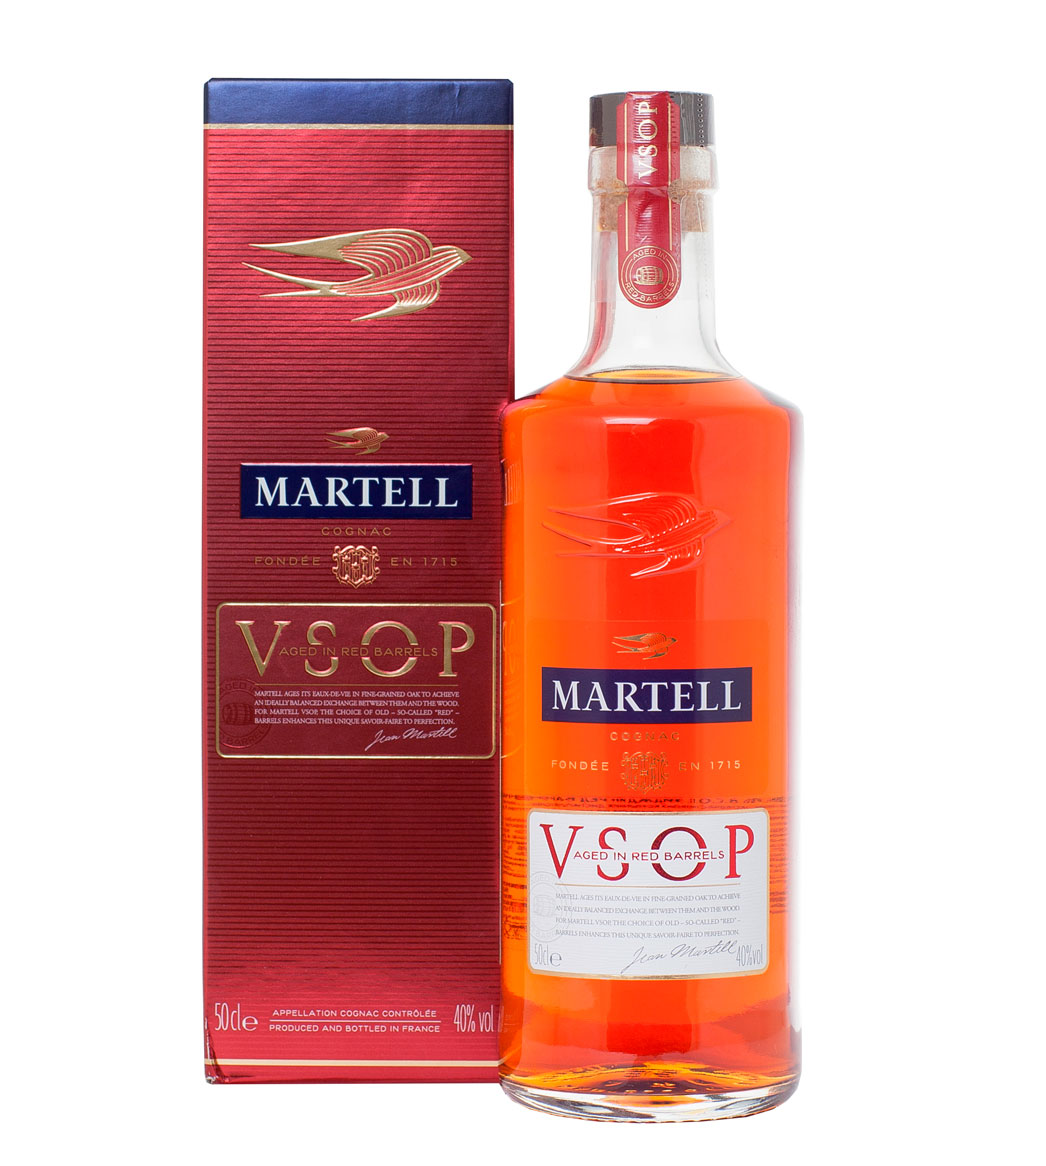 Martell VSOP Aged in Red barrels - коньяк Мартель ВСОП Эйджд Ин Ред Баррелс 0.5 л в п/у